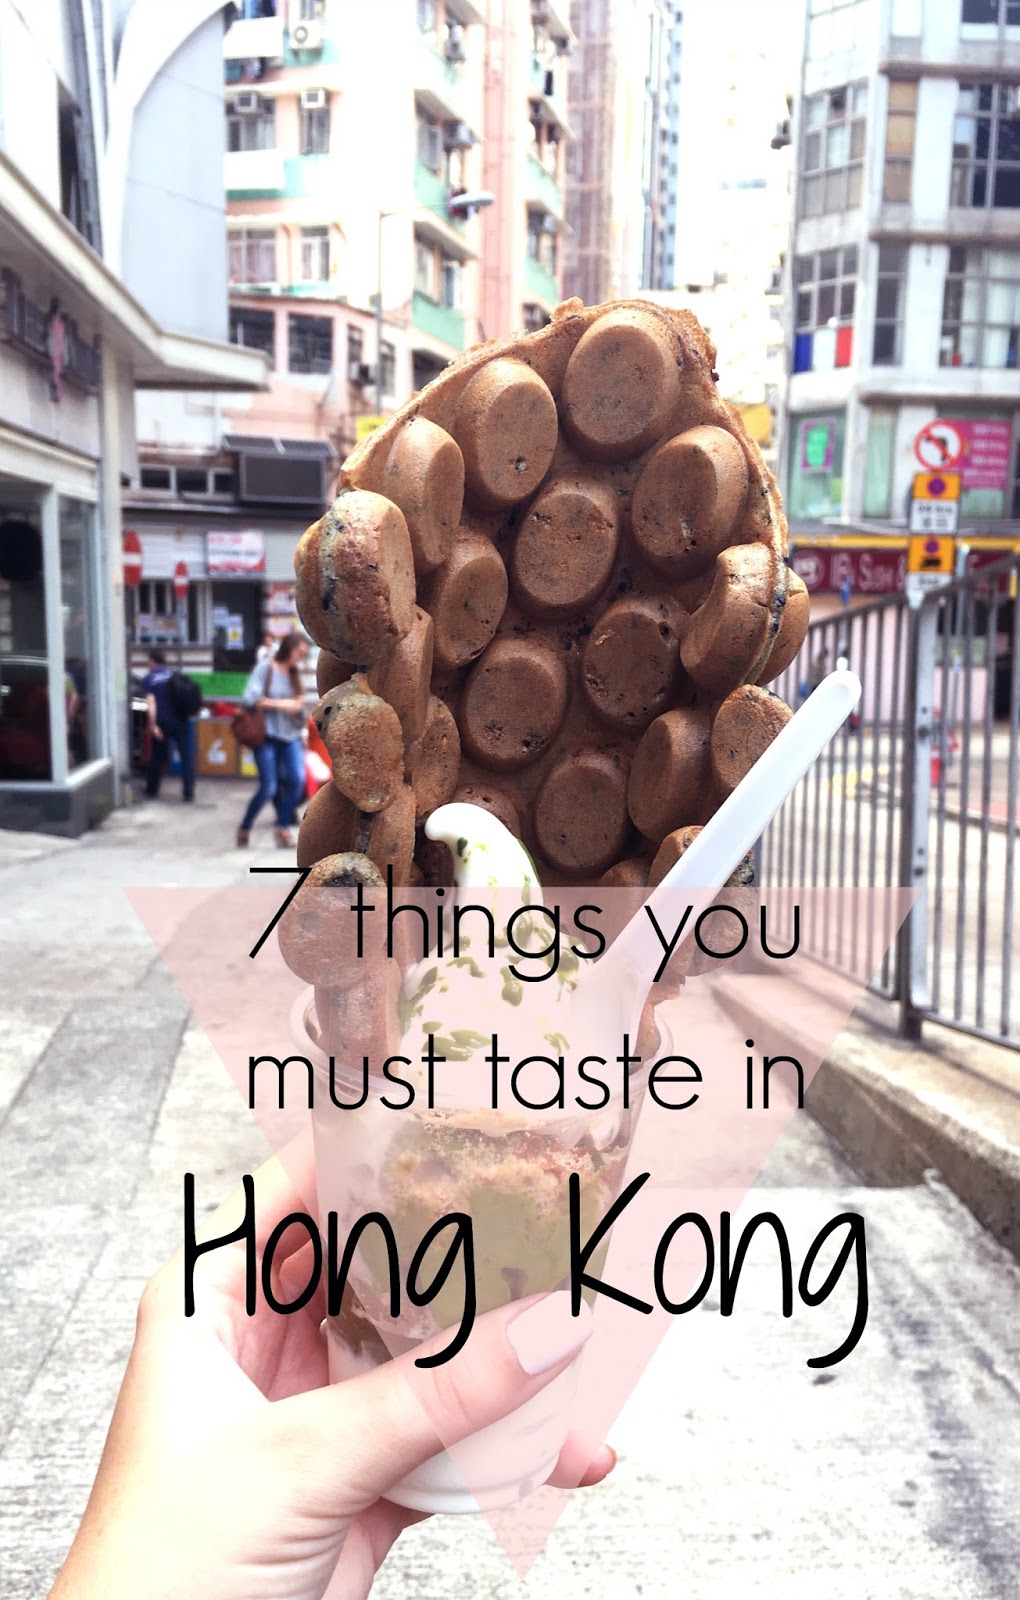 7 things you must taste when visiting Hong Kong